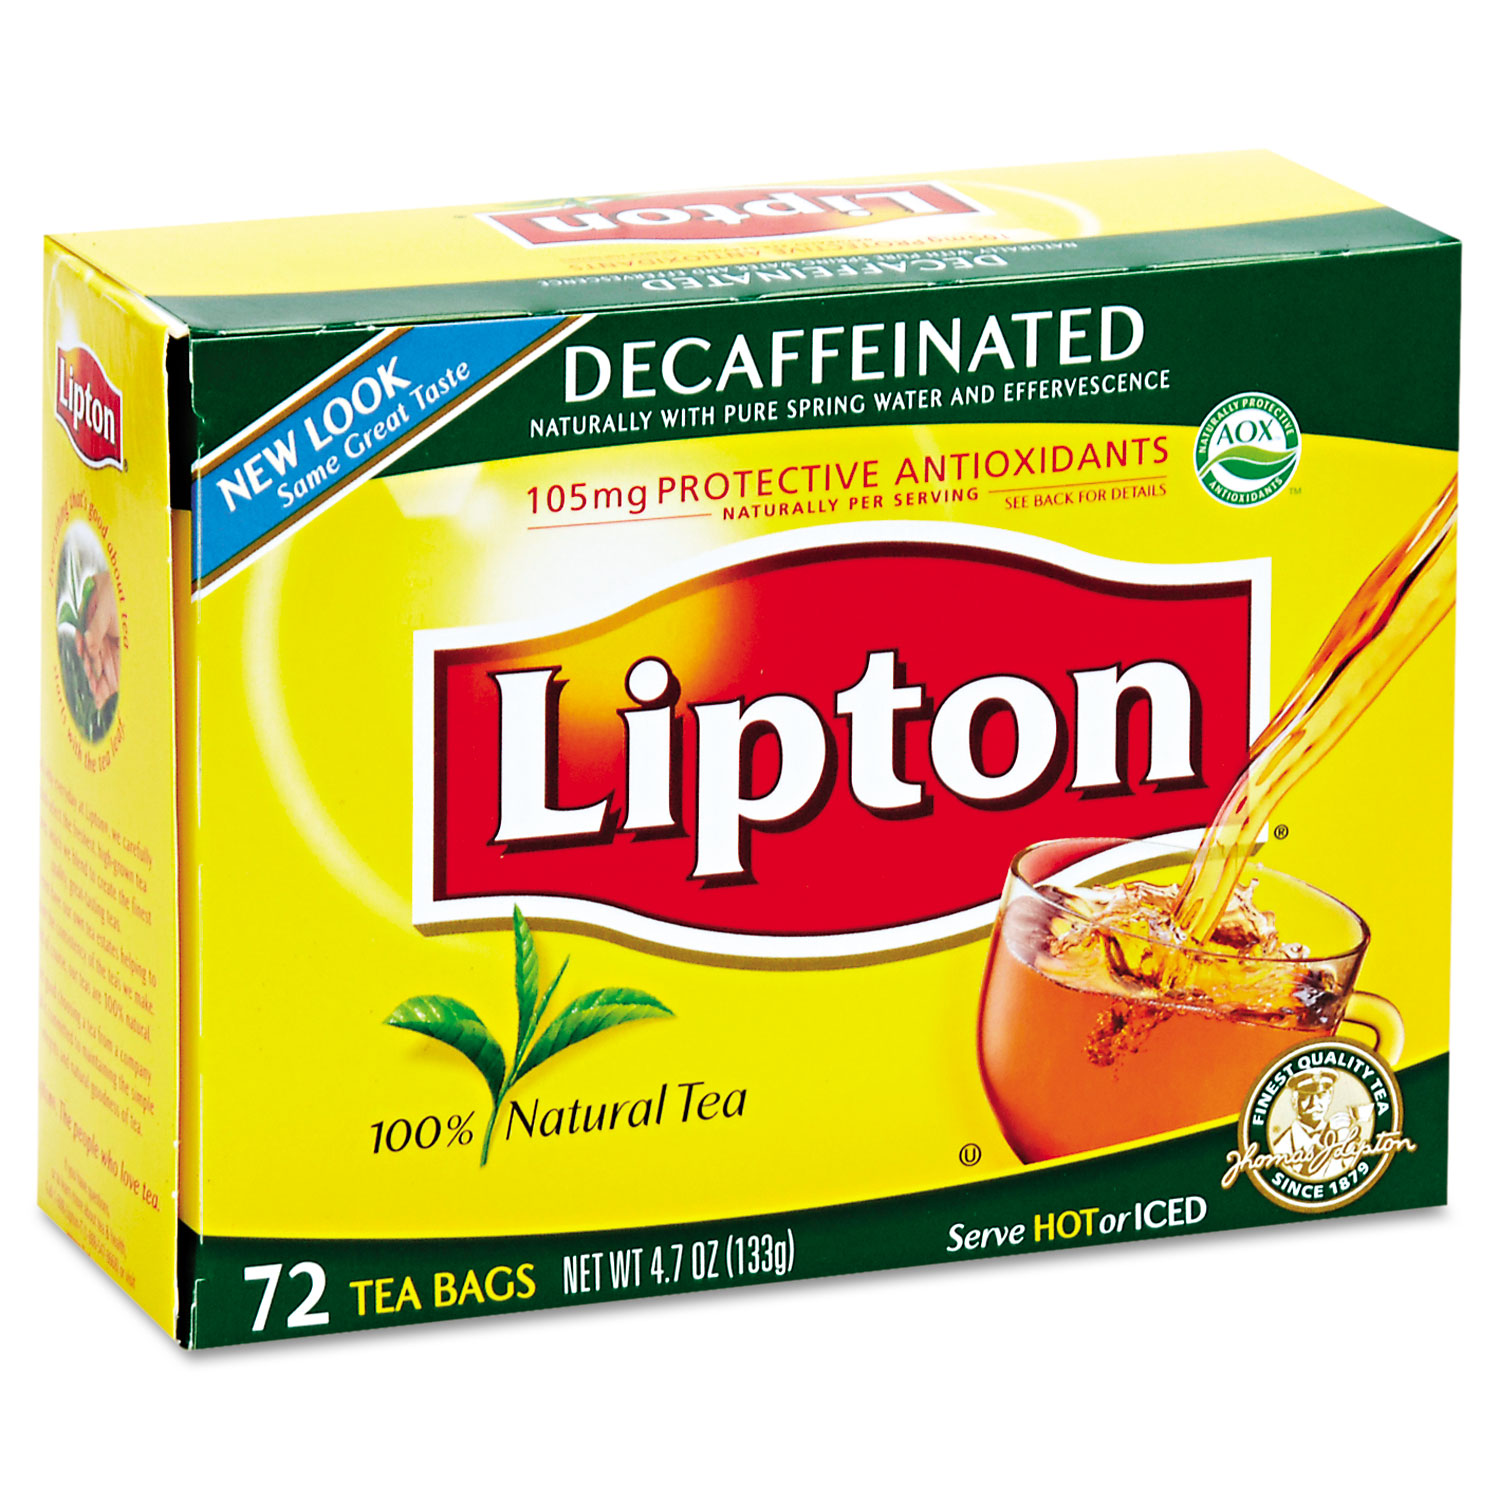  Lipton TJL00290 Tea Bags, Decaffeinated, 72/Box (LIP290) 